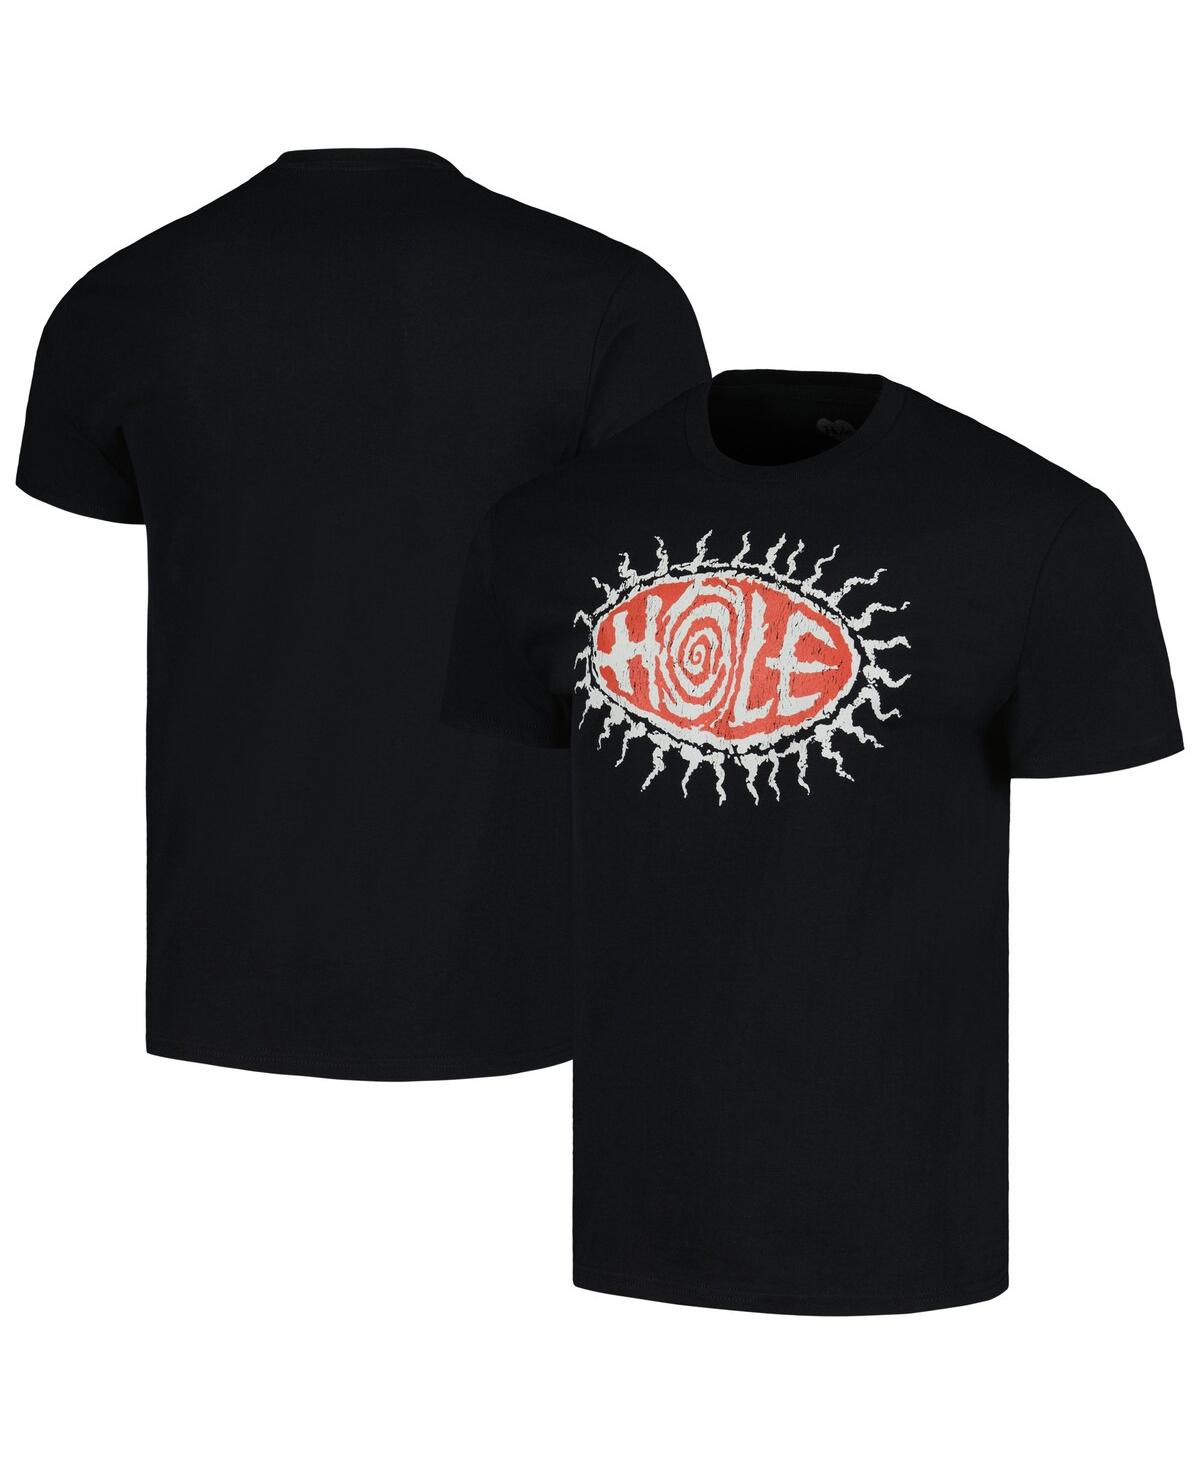 Manhead Merch Men's  Black Hole Eyeball Graphic T-shirt